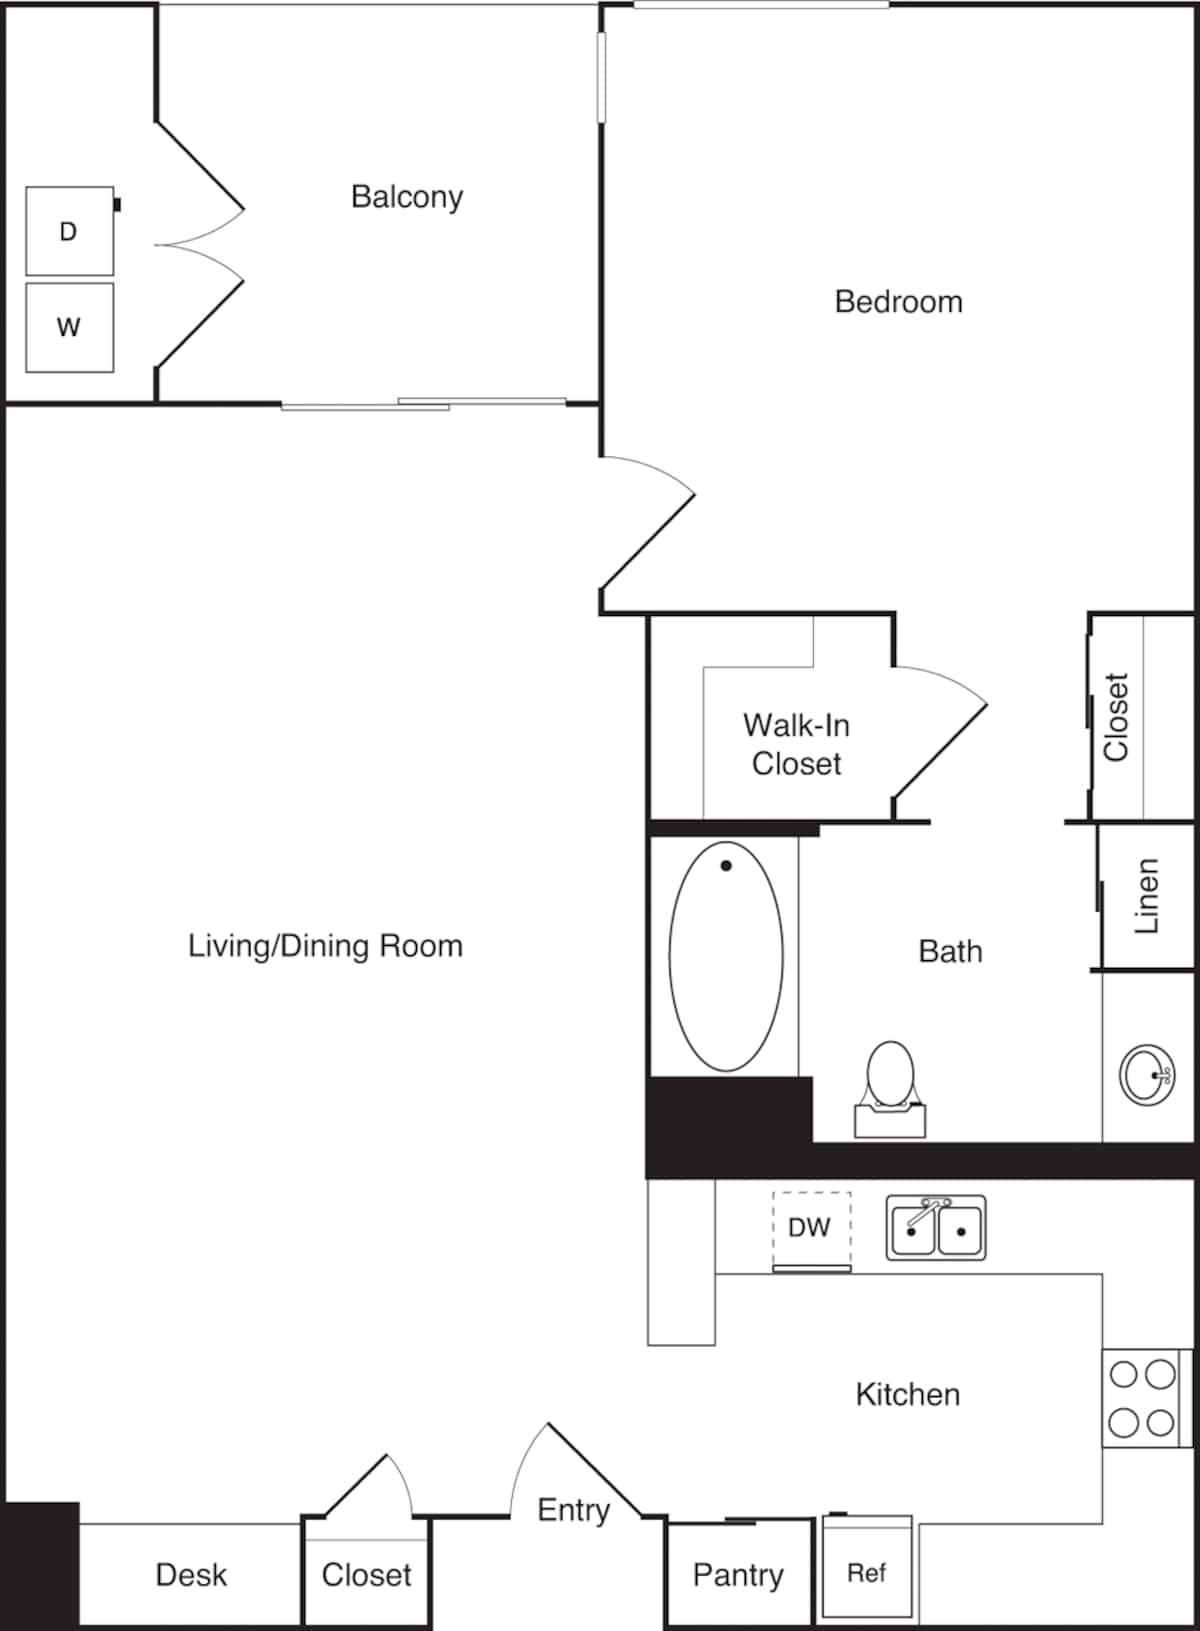 Floorplan diagram for C-The Peak, showing 1 bedroom